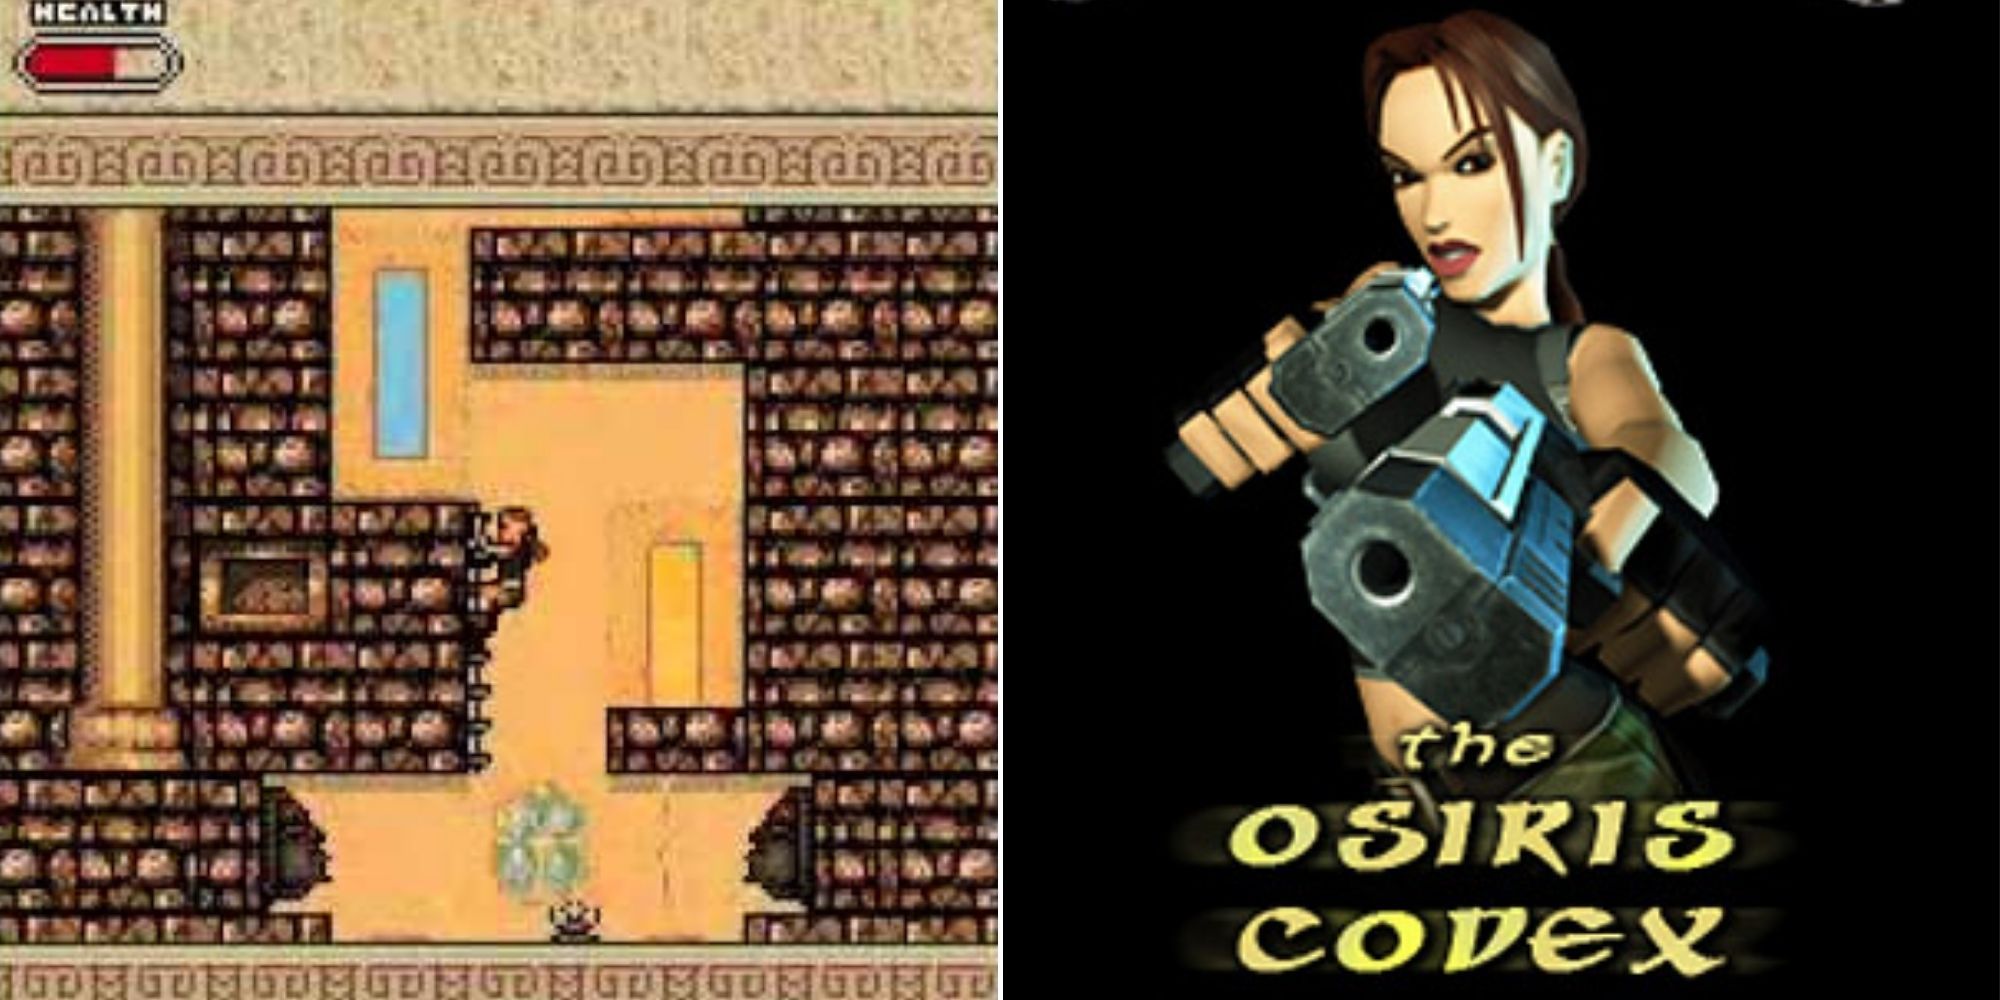 Lara Croft climbing a wall and the Logo for Tomb Raider: The Osiris Codex